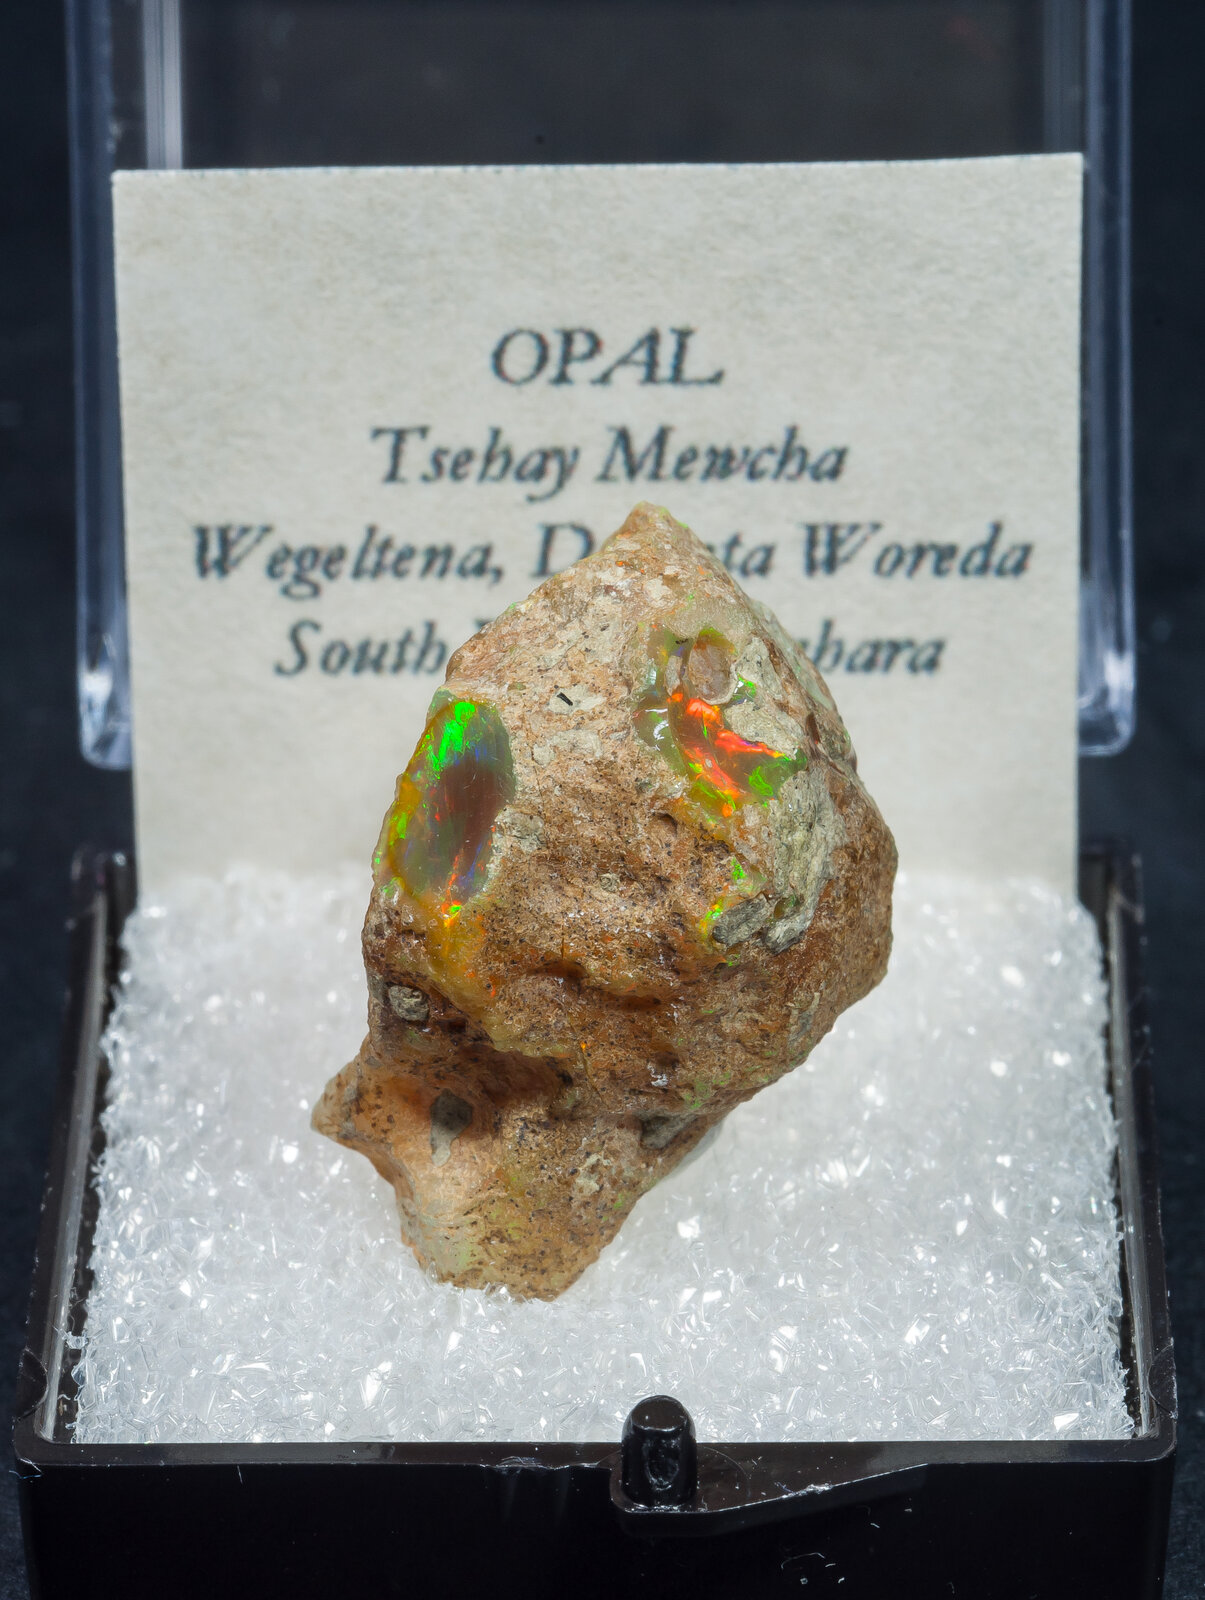 specimens/s_imagesAN2/Opal-TP11AN2f1.jpg